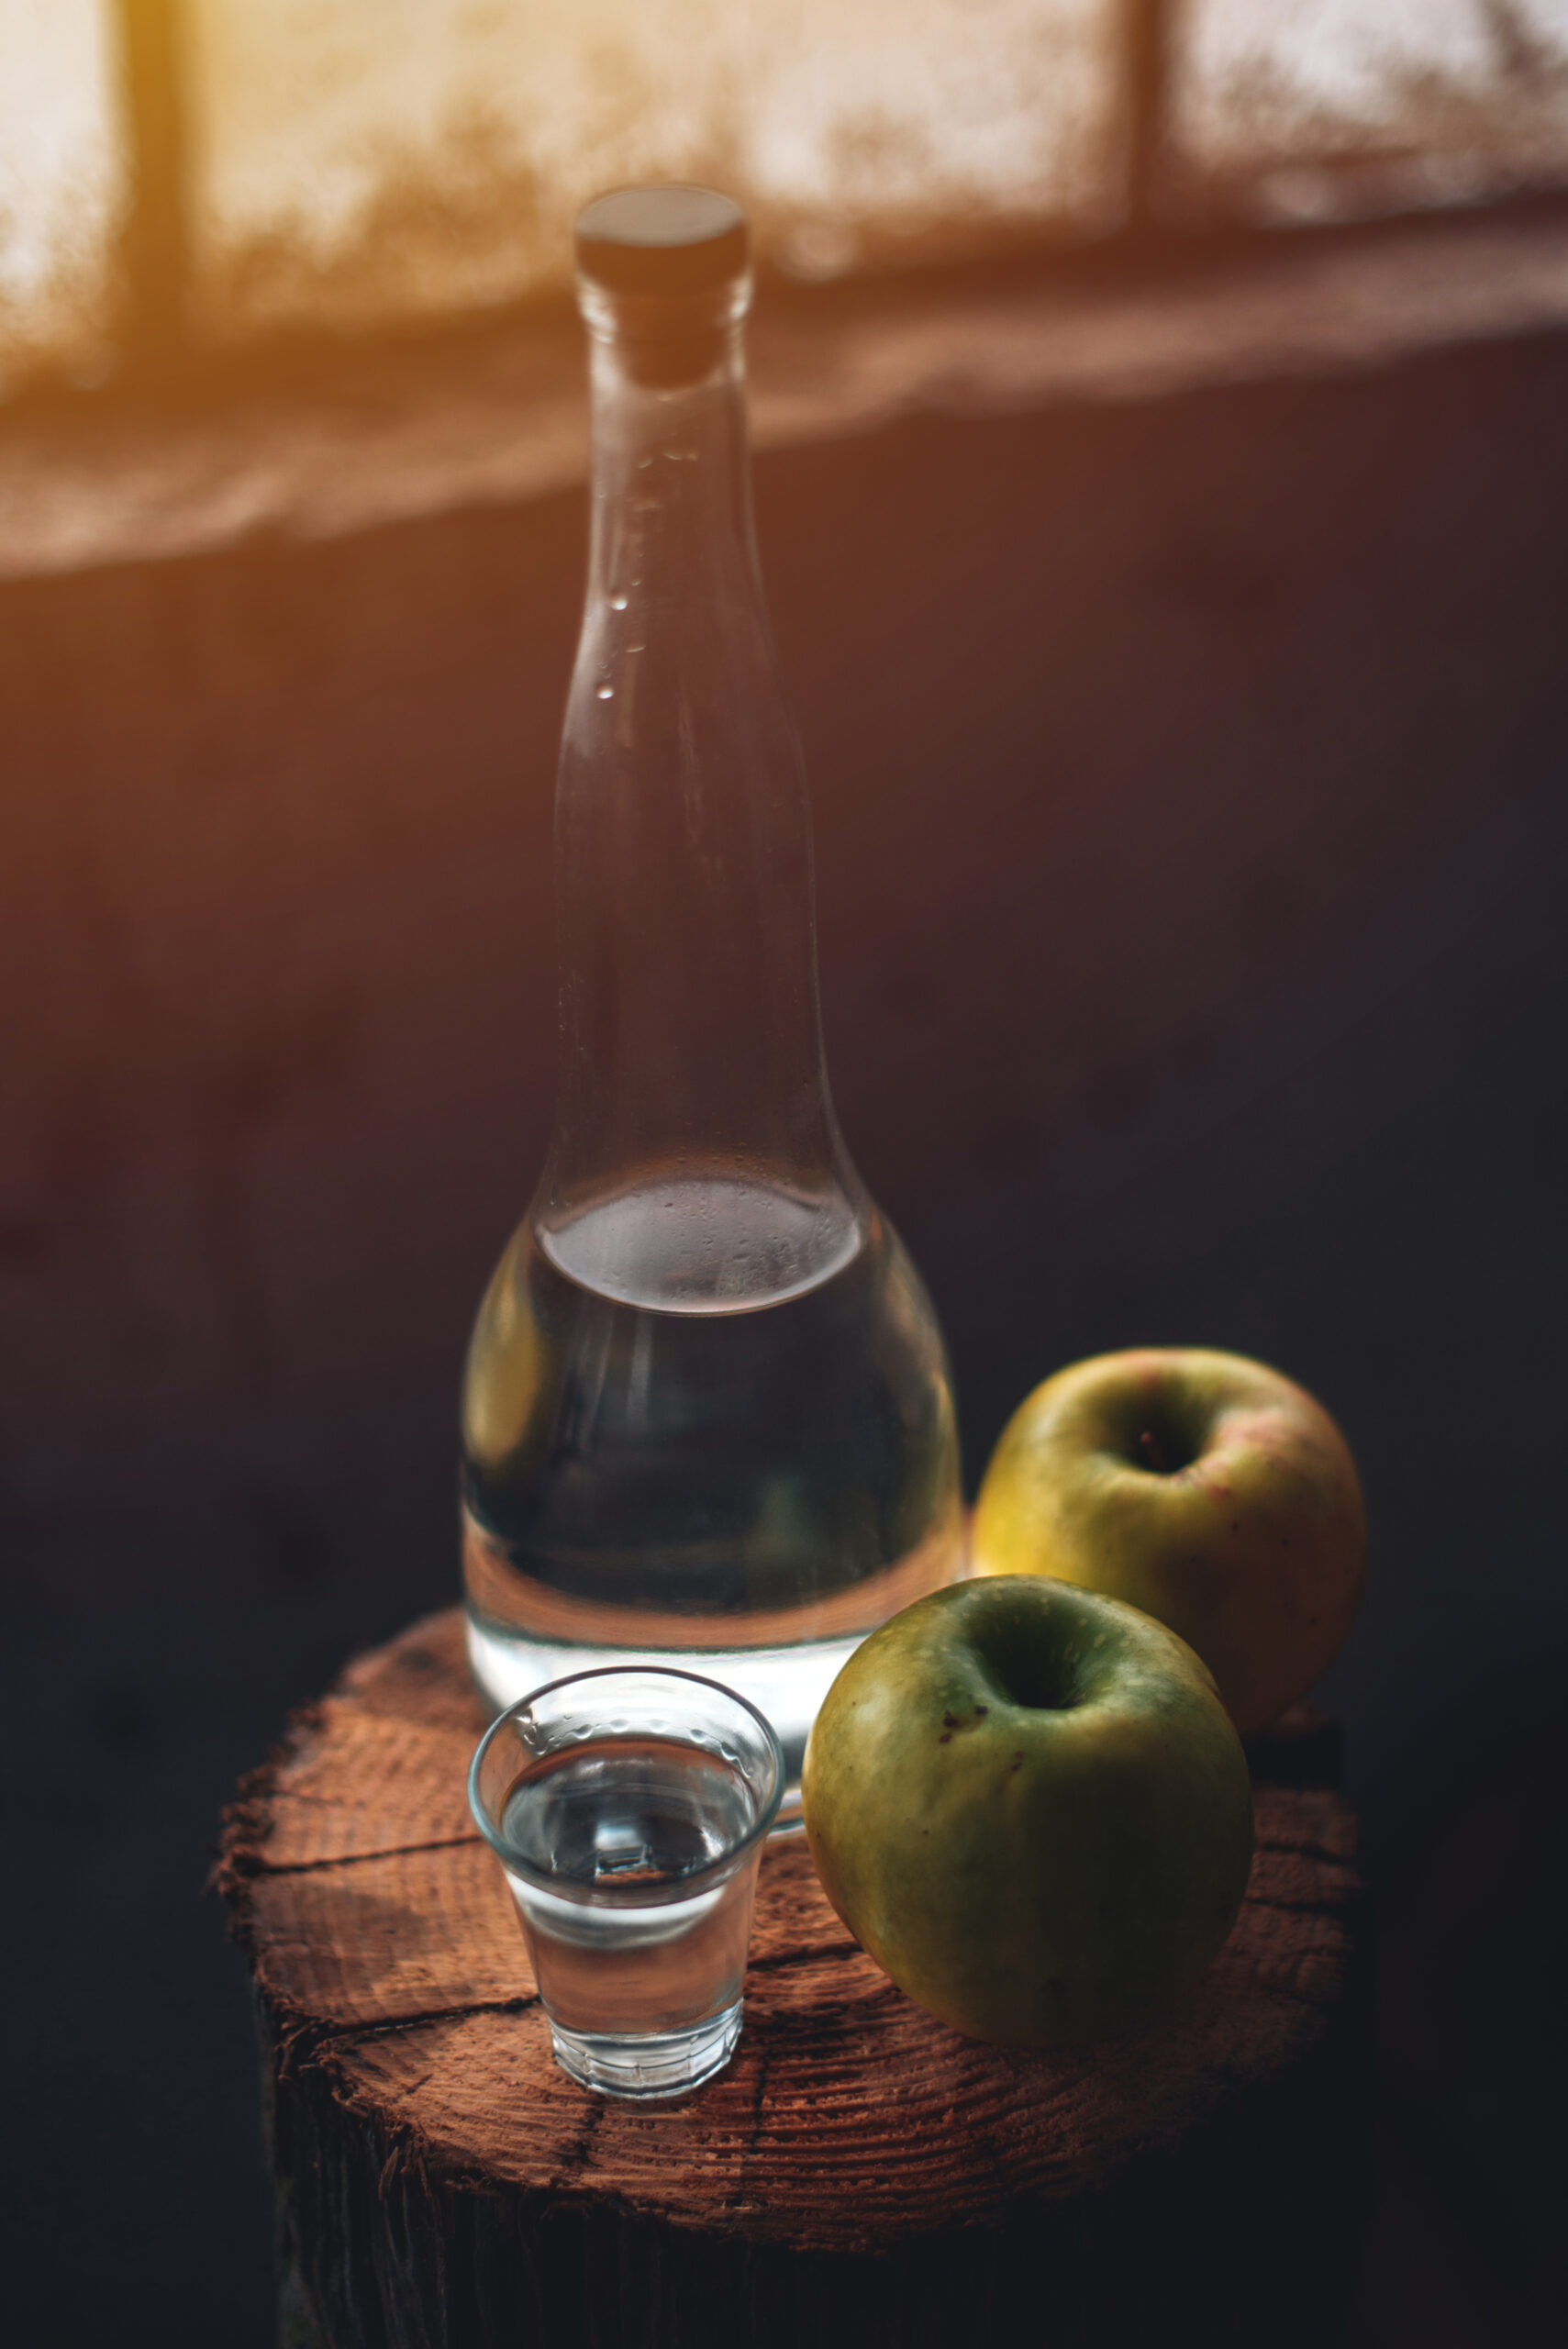 apple brandy rustic retro atmosphere 2021 08 26 23 02 51 utc scaled